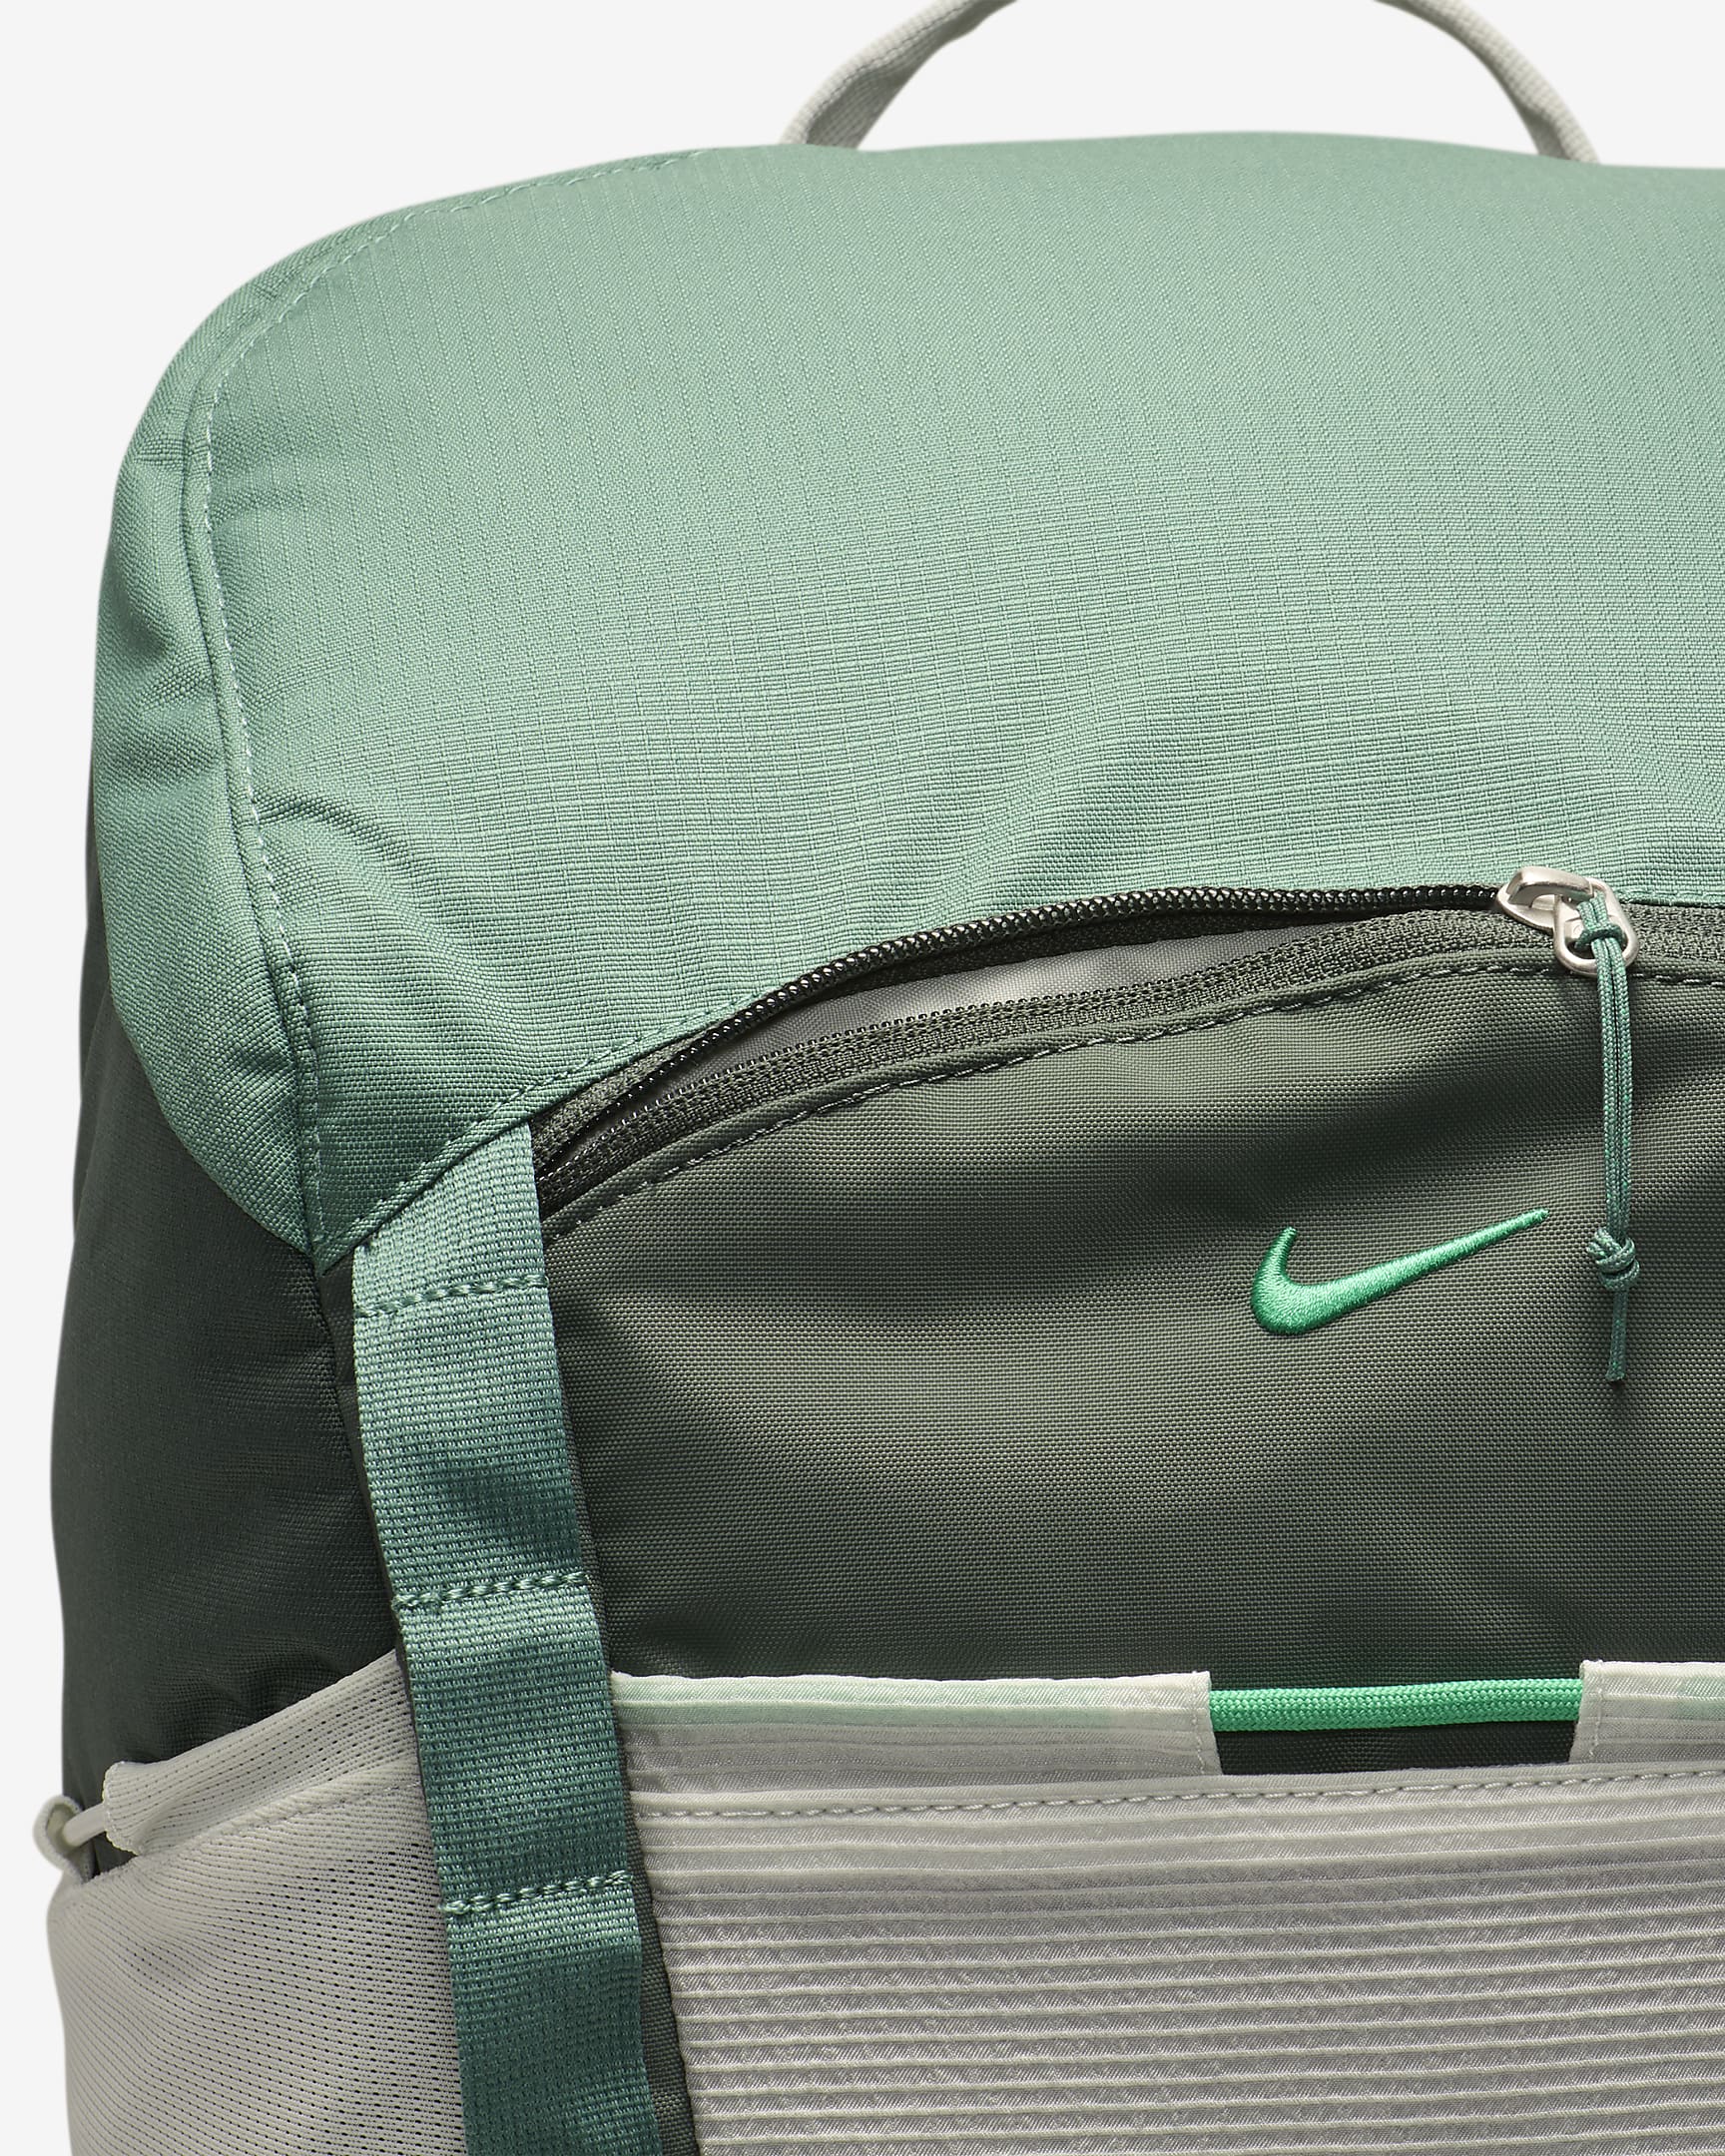 Nike Hike Backpack (27L) - Vintage Green/Light Silver/Stadium Green